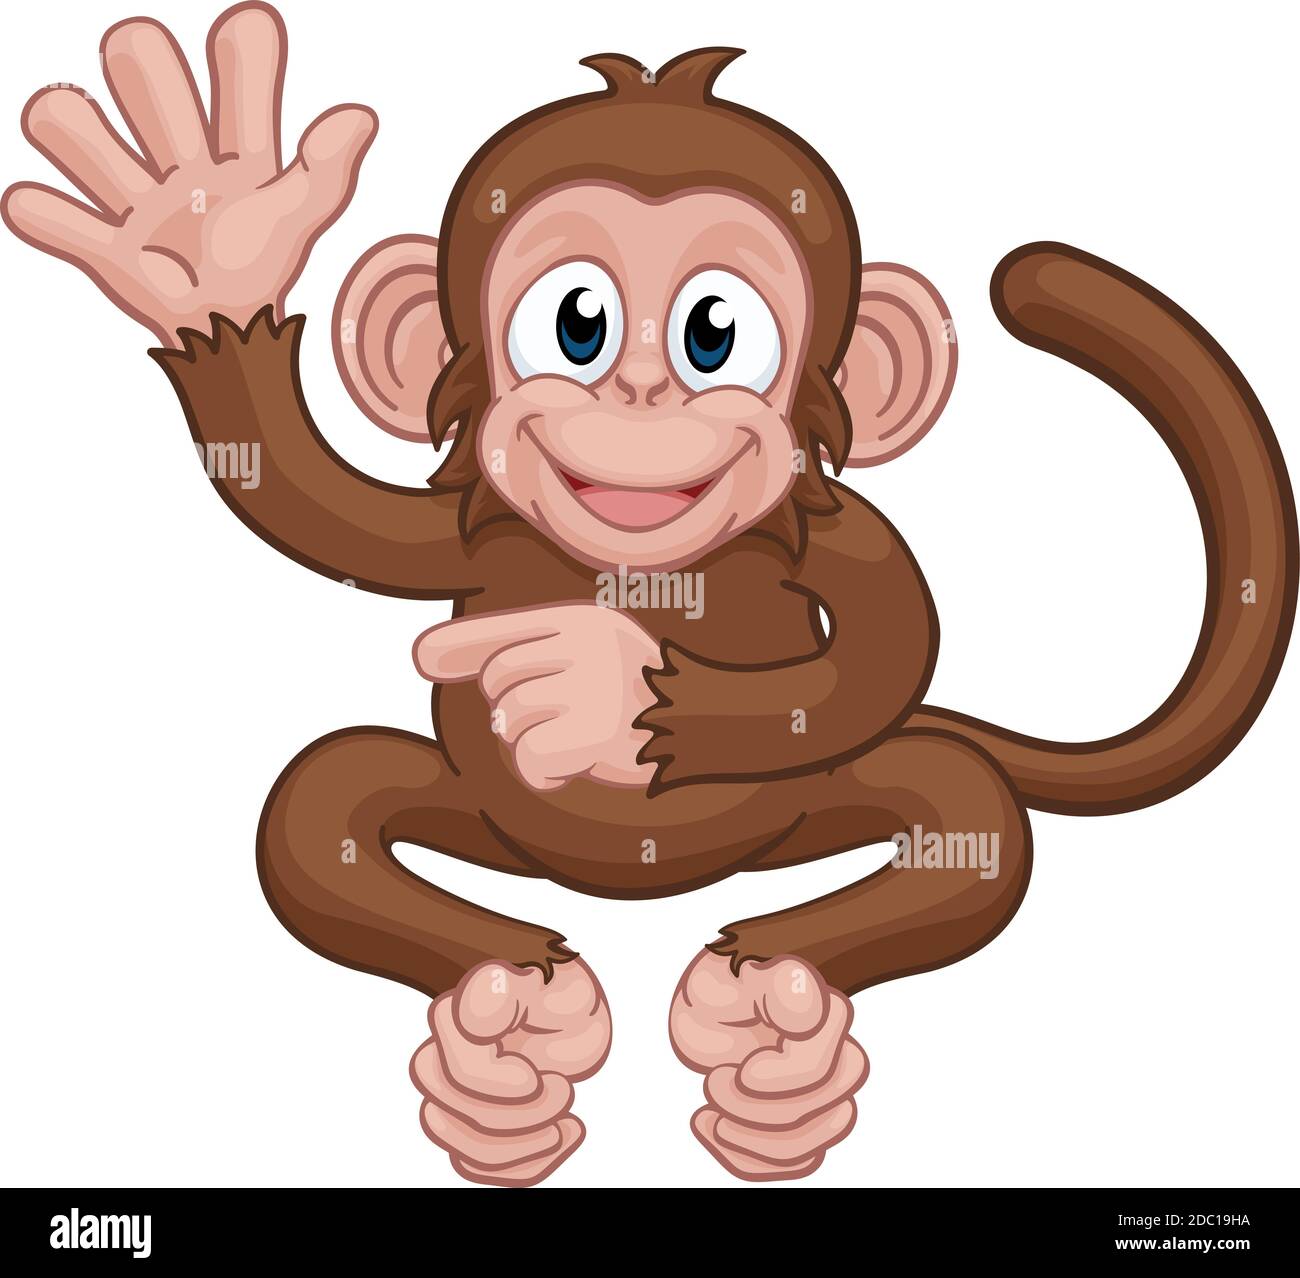 Monkey Cartoon Animal Waving and Pointing Stock Vector